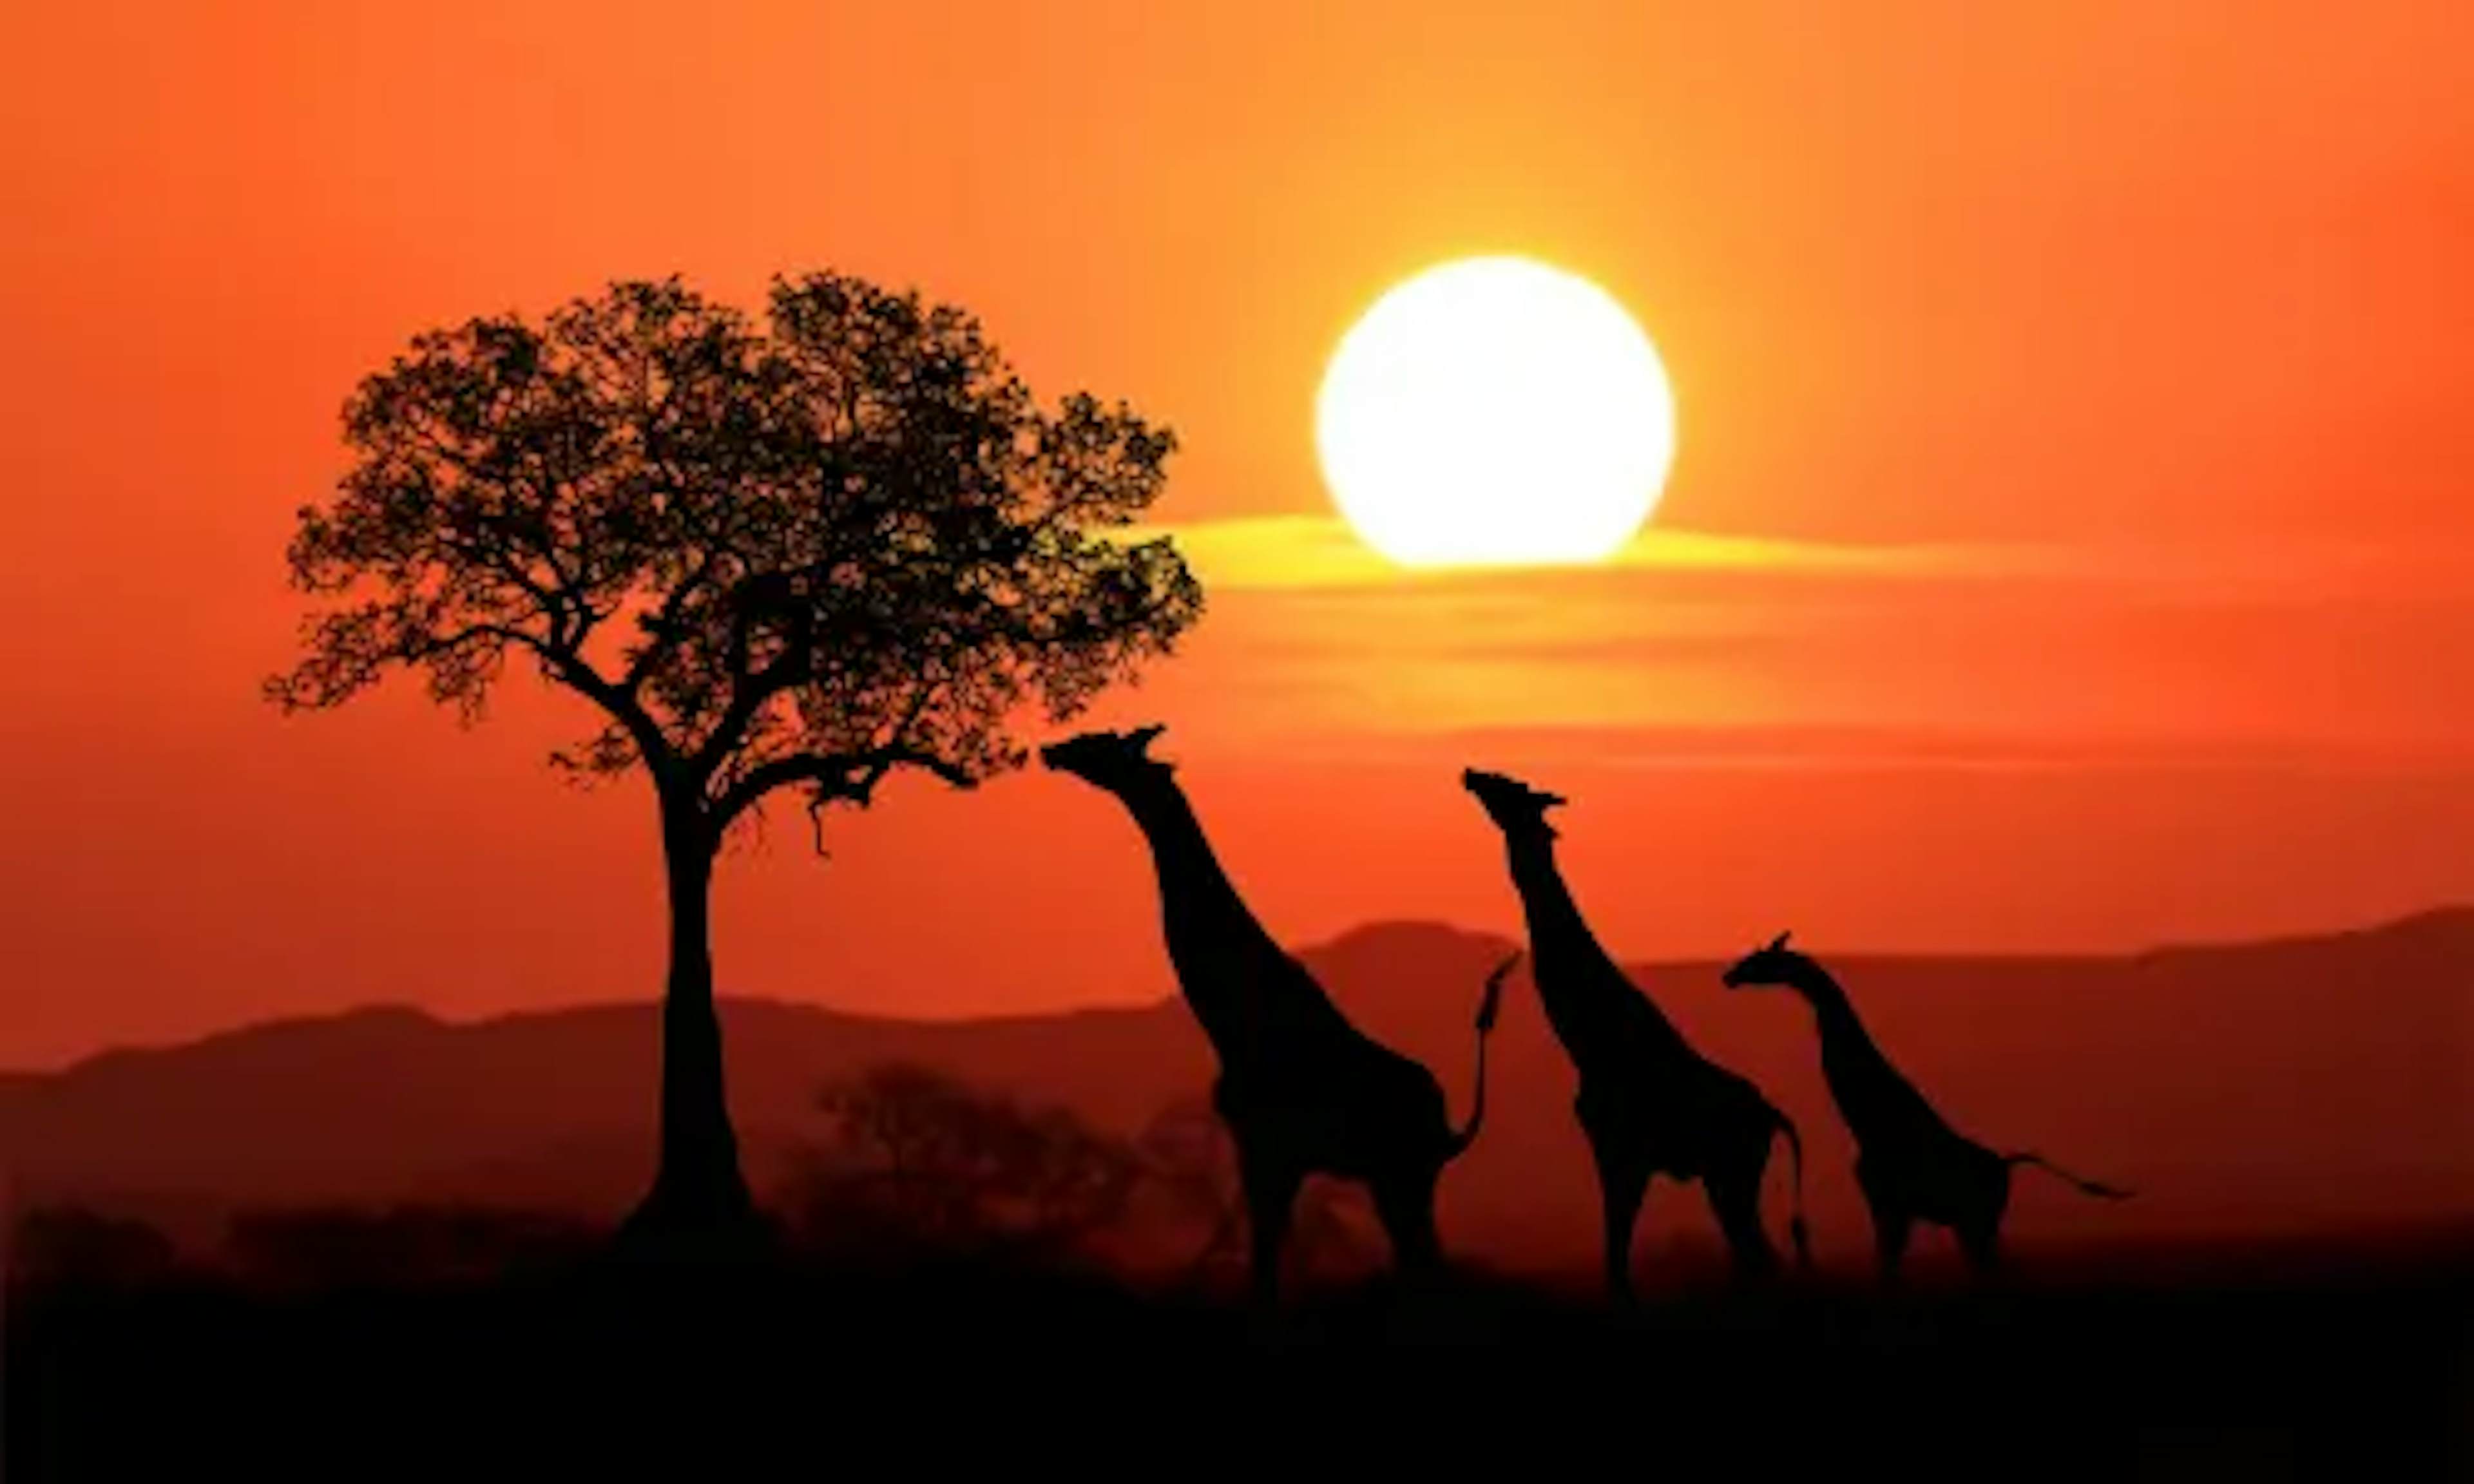 Three giraffes walking along the horizon at sunset in South Africa